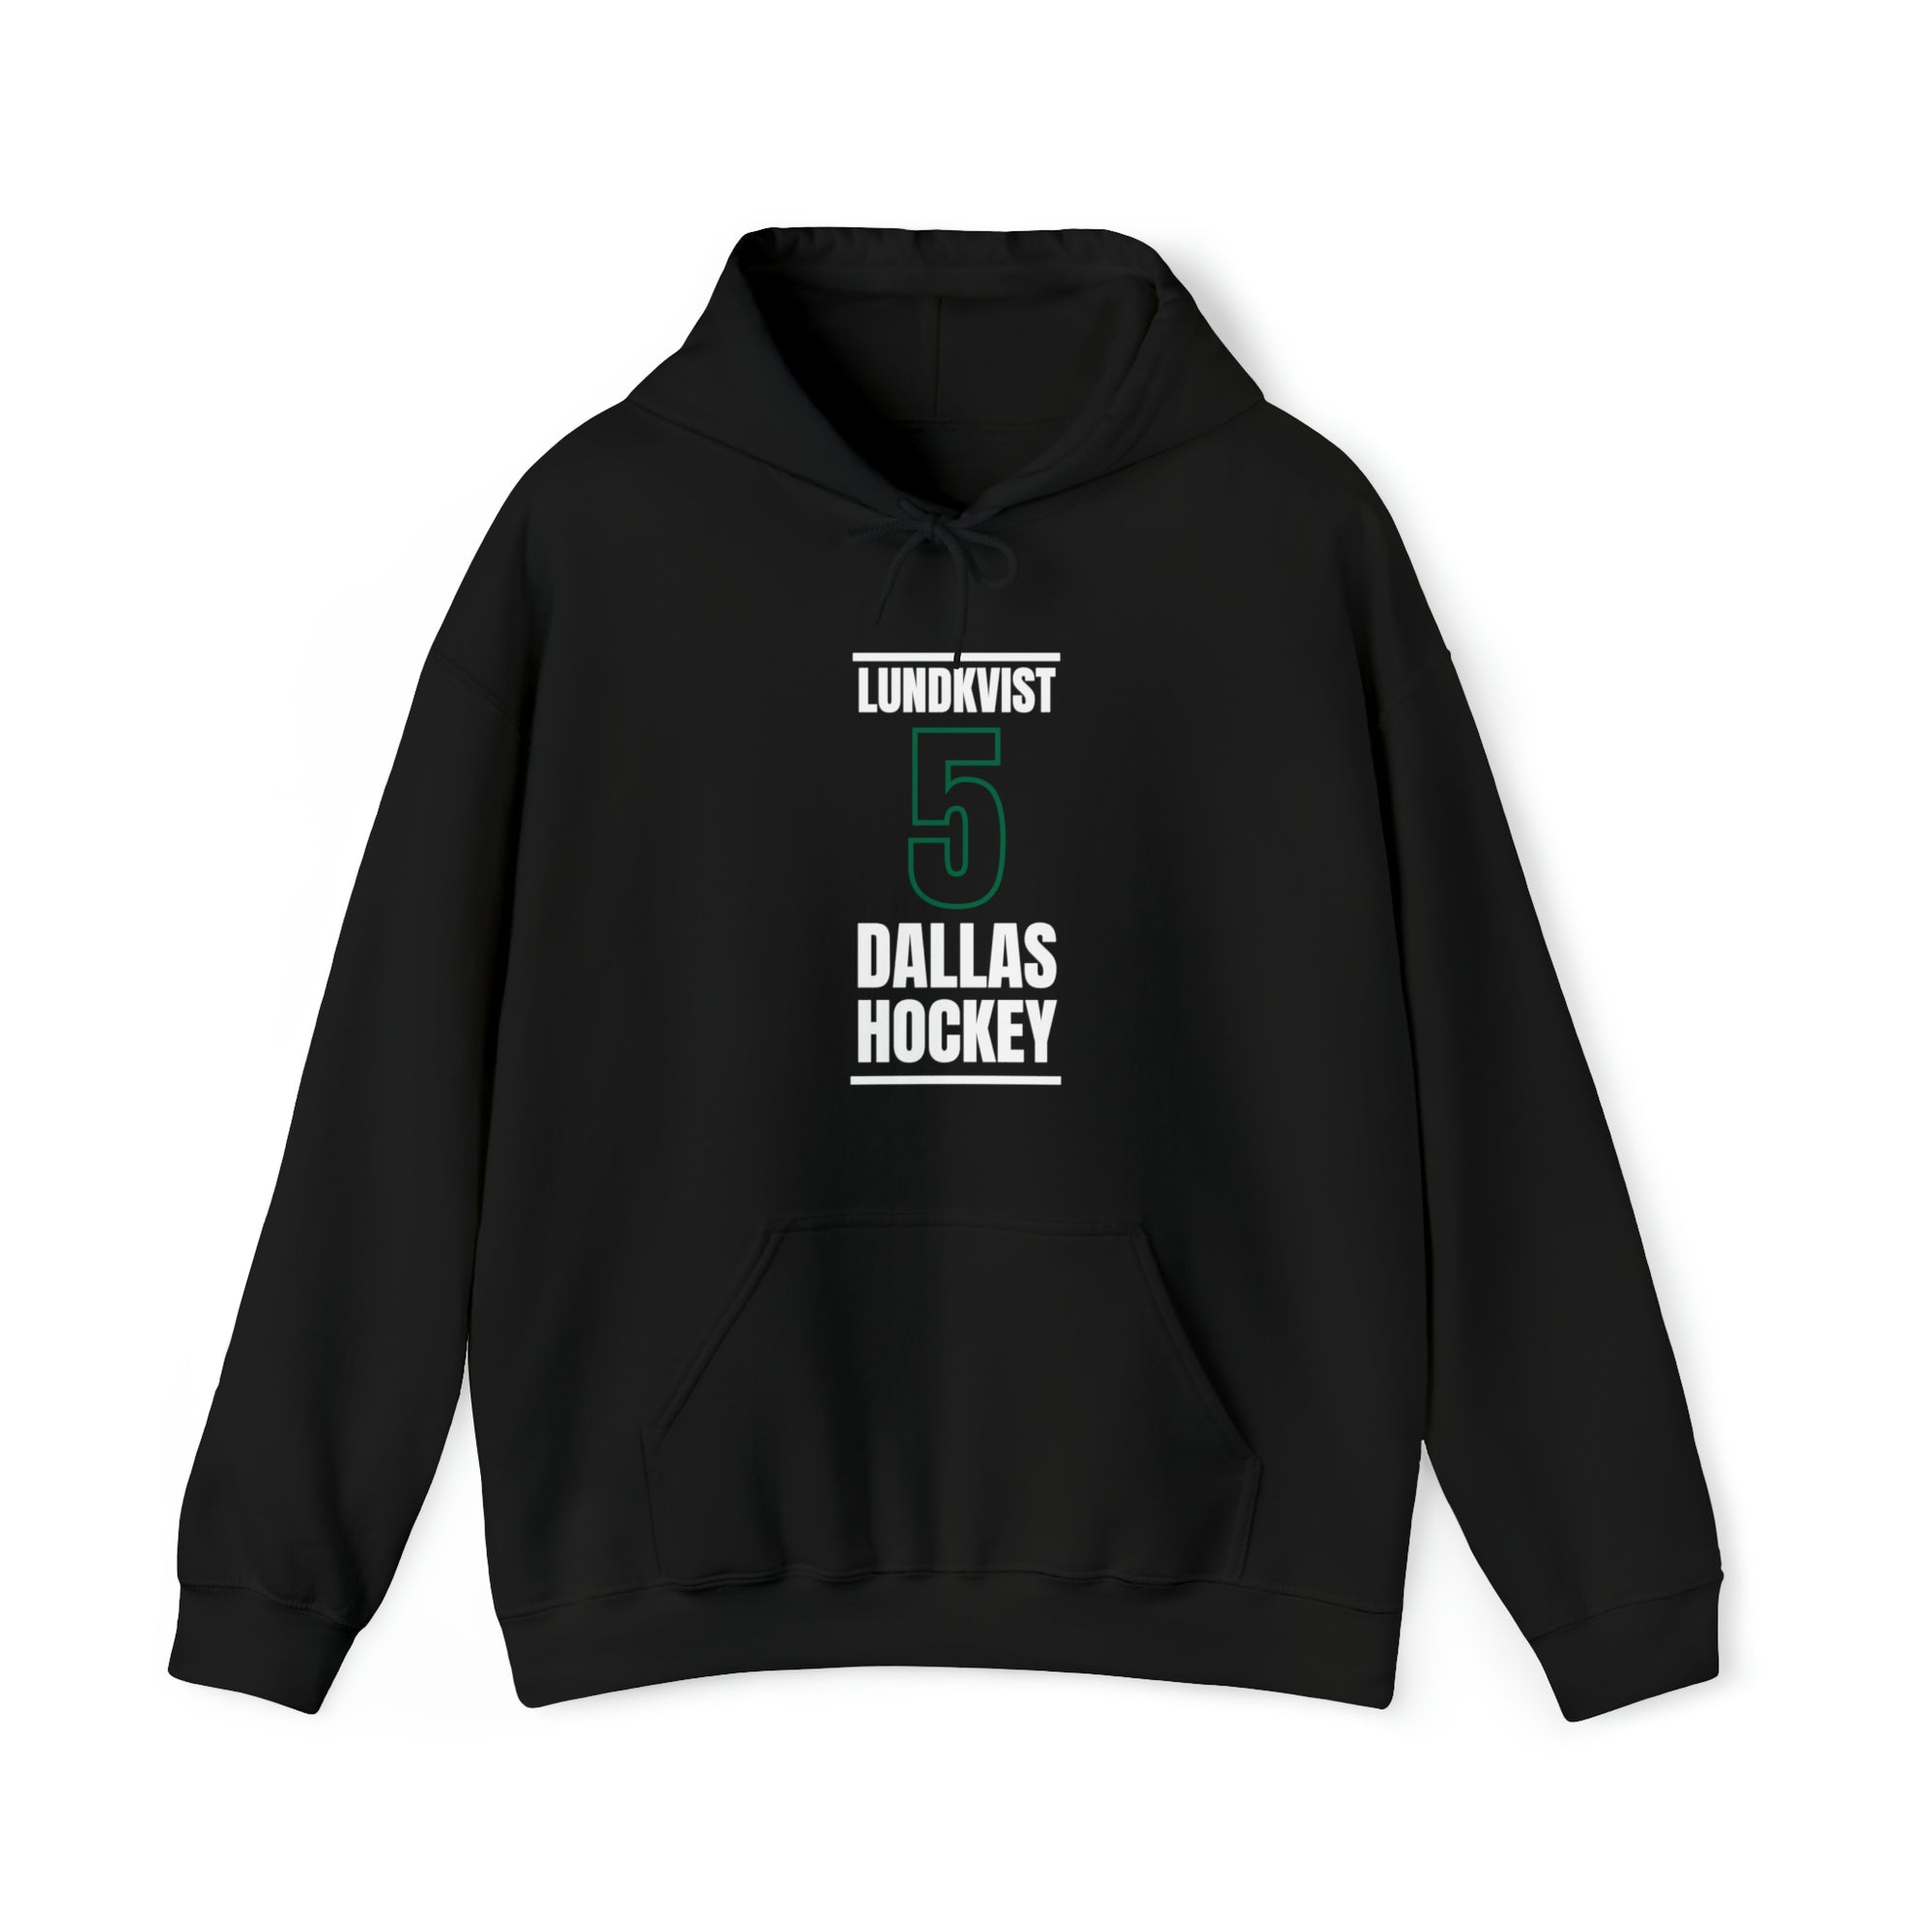 Lundkvist 5 Dallas Hockey Black Vertical Design Unisex Hooded Sweatshirt